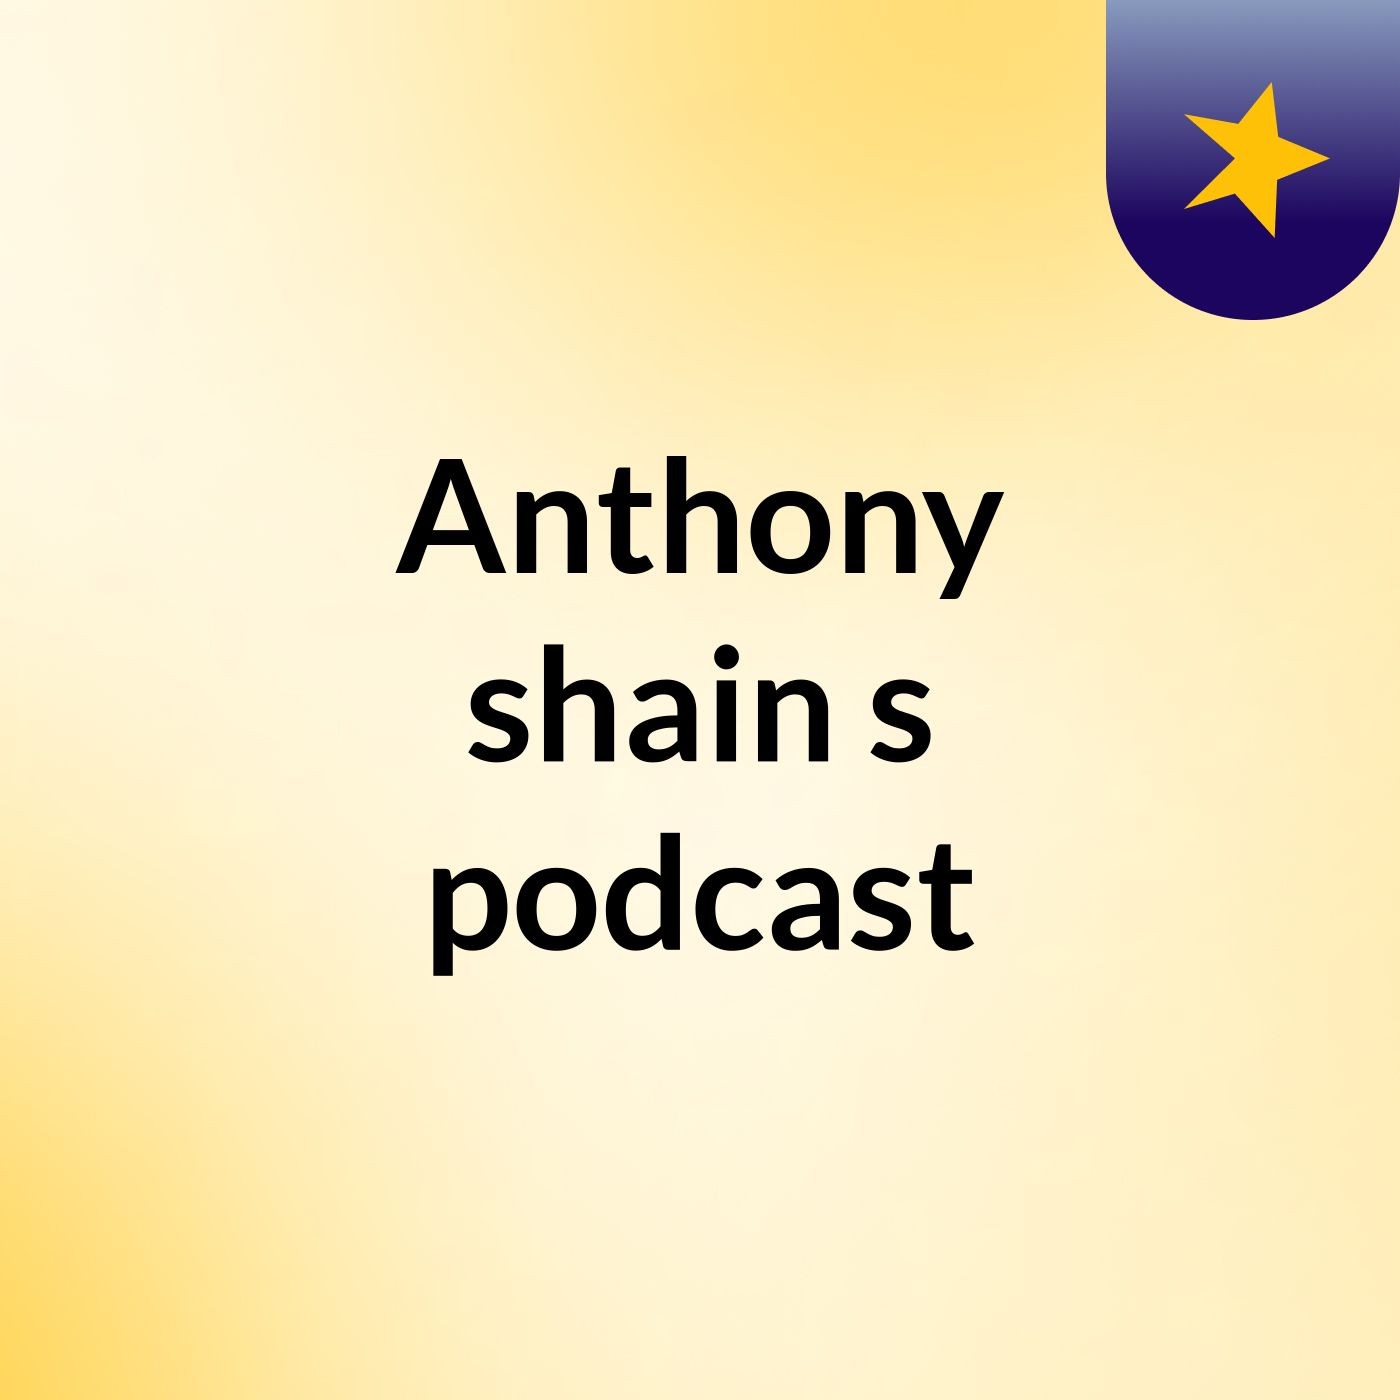 Anthony shain's podcast